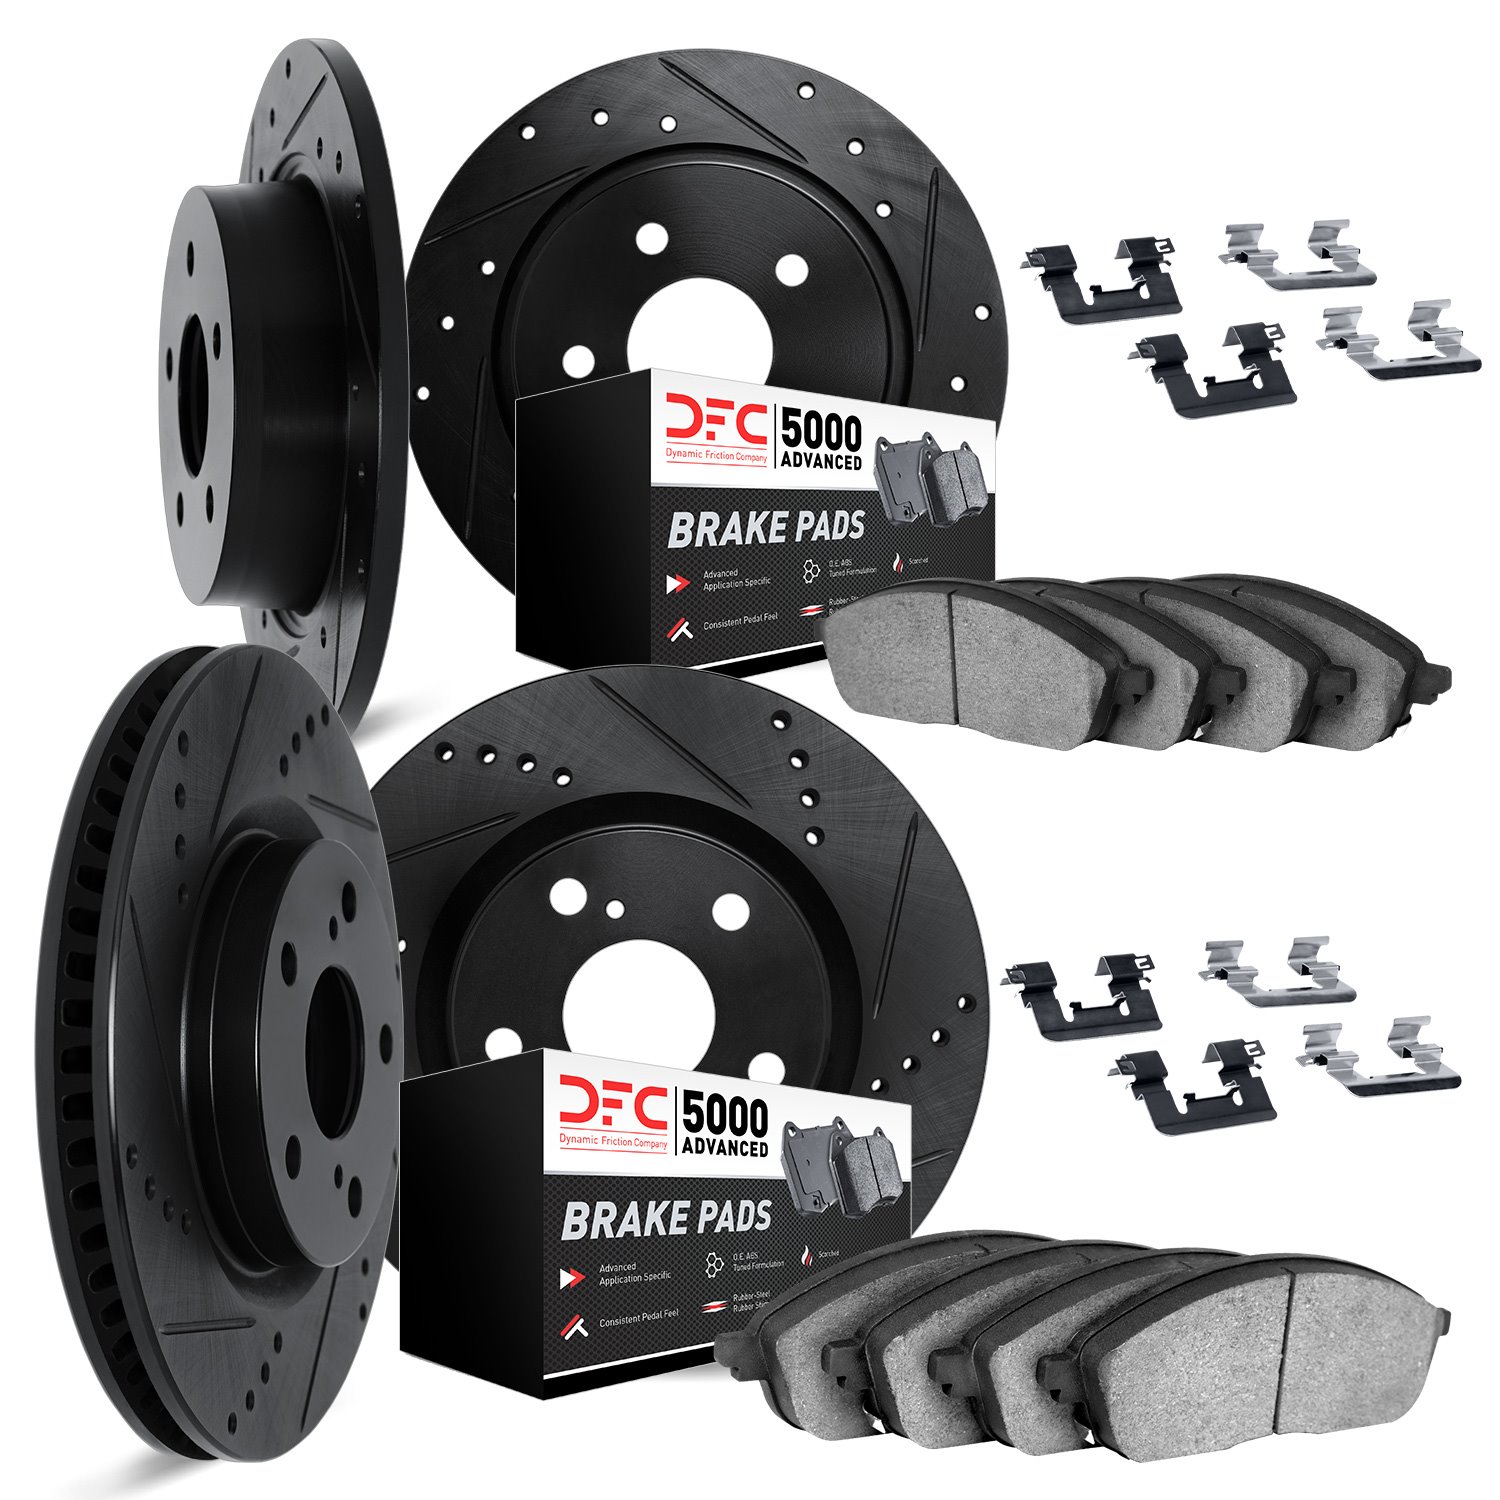 8514-07003 Drilled/Slotted Brake Rotors w/5000 Advanced Brake Pads Kit & Hardware [Black], 2014-2019 Mopar, Position: Front and